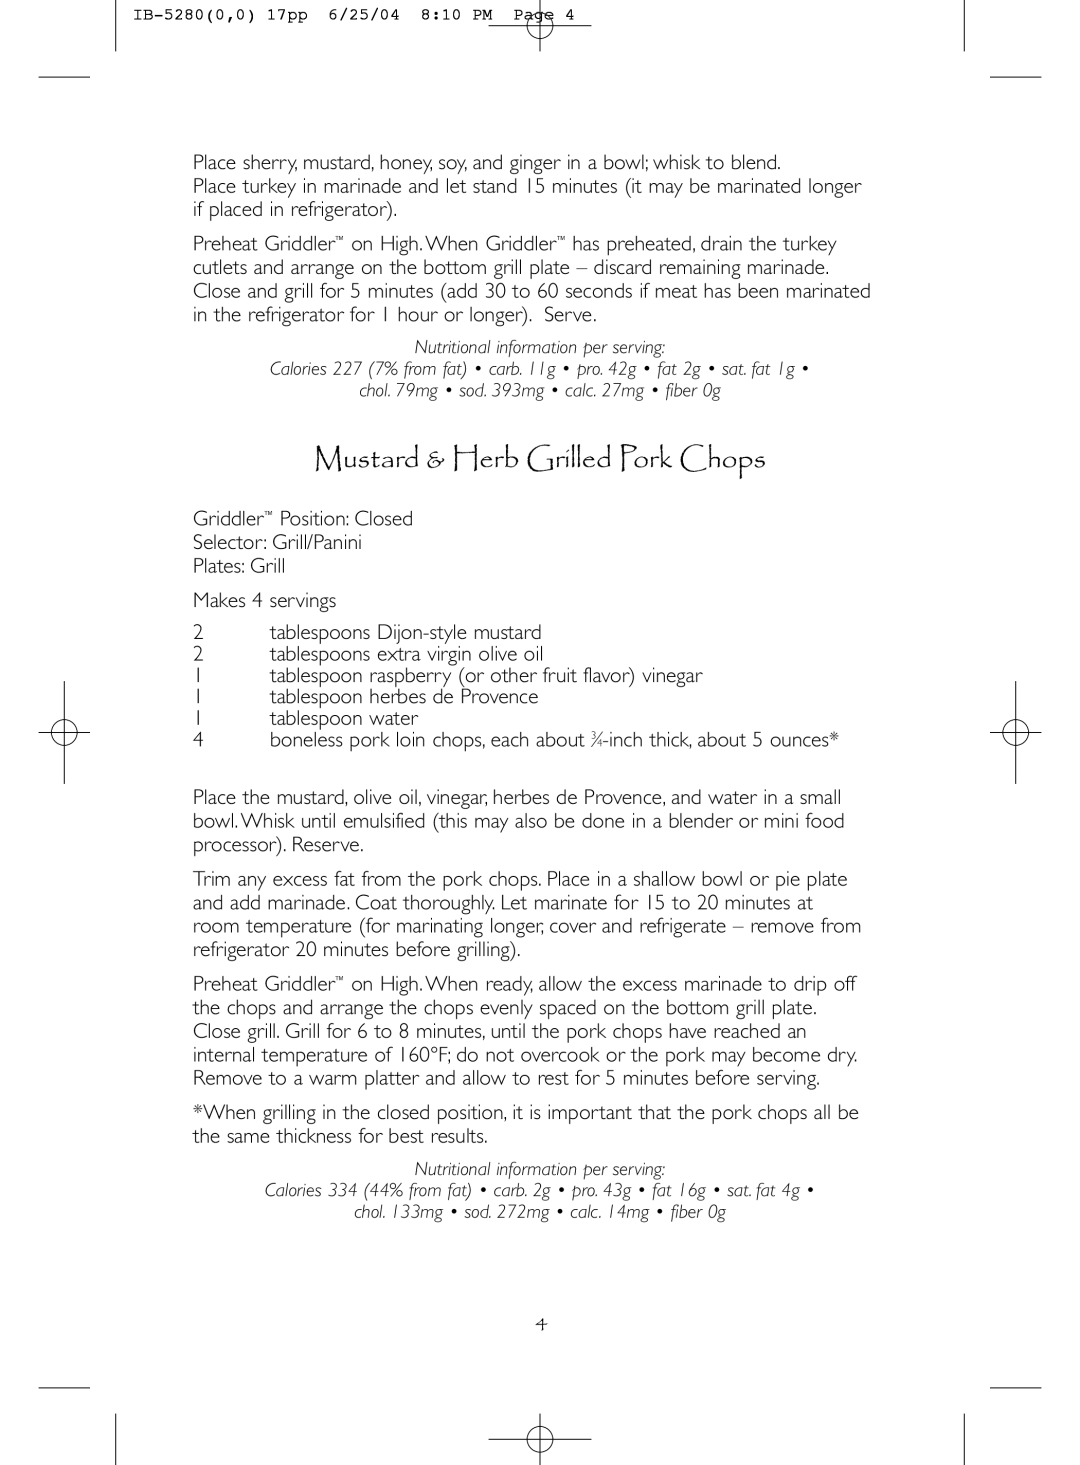 Cuisinart IB-5280A, GEW 509 IB-3A3 manual Mustard & Herb Grilled Pork Chops 